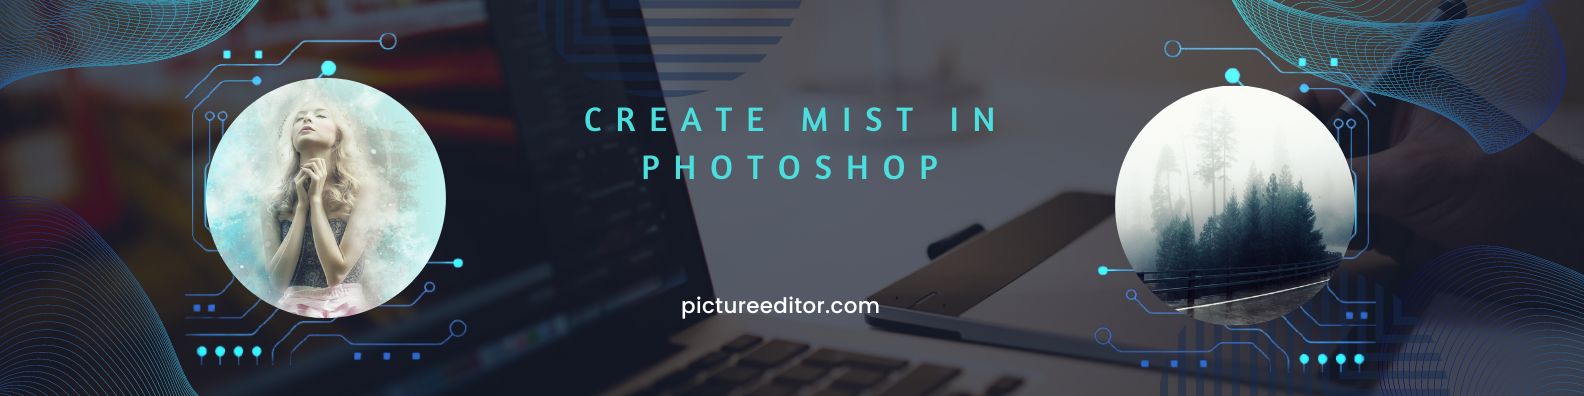 Create Mist in Photoshop